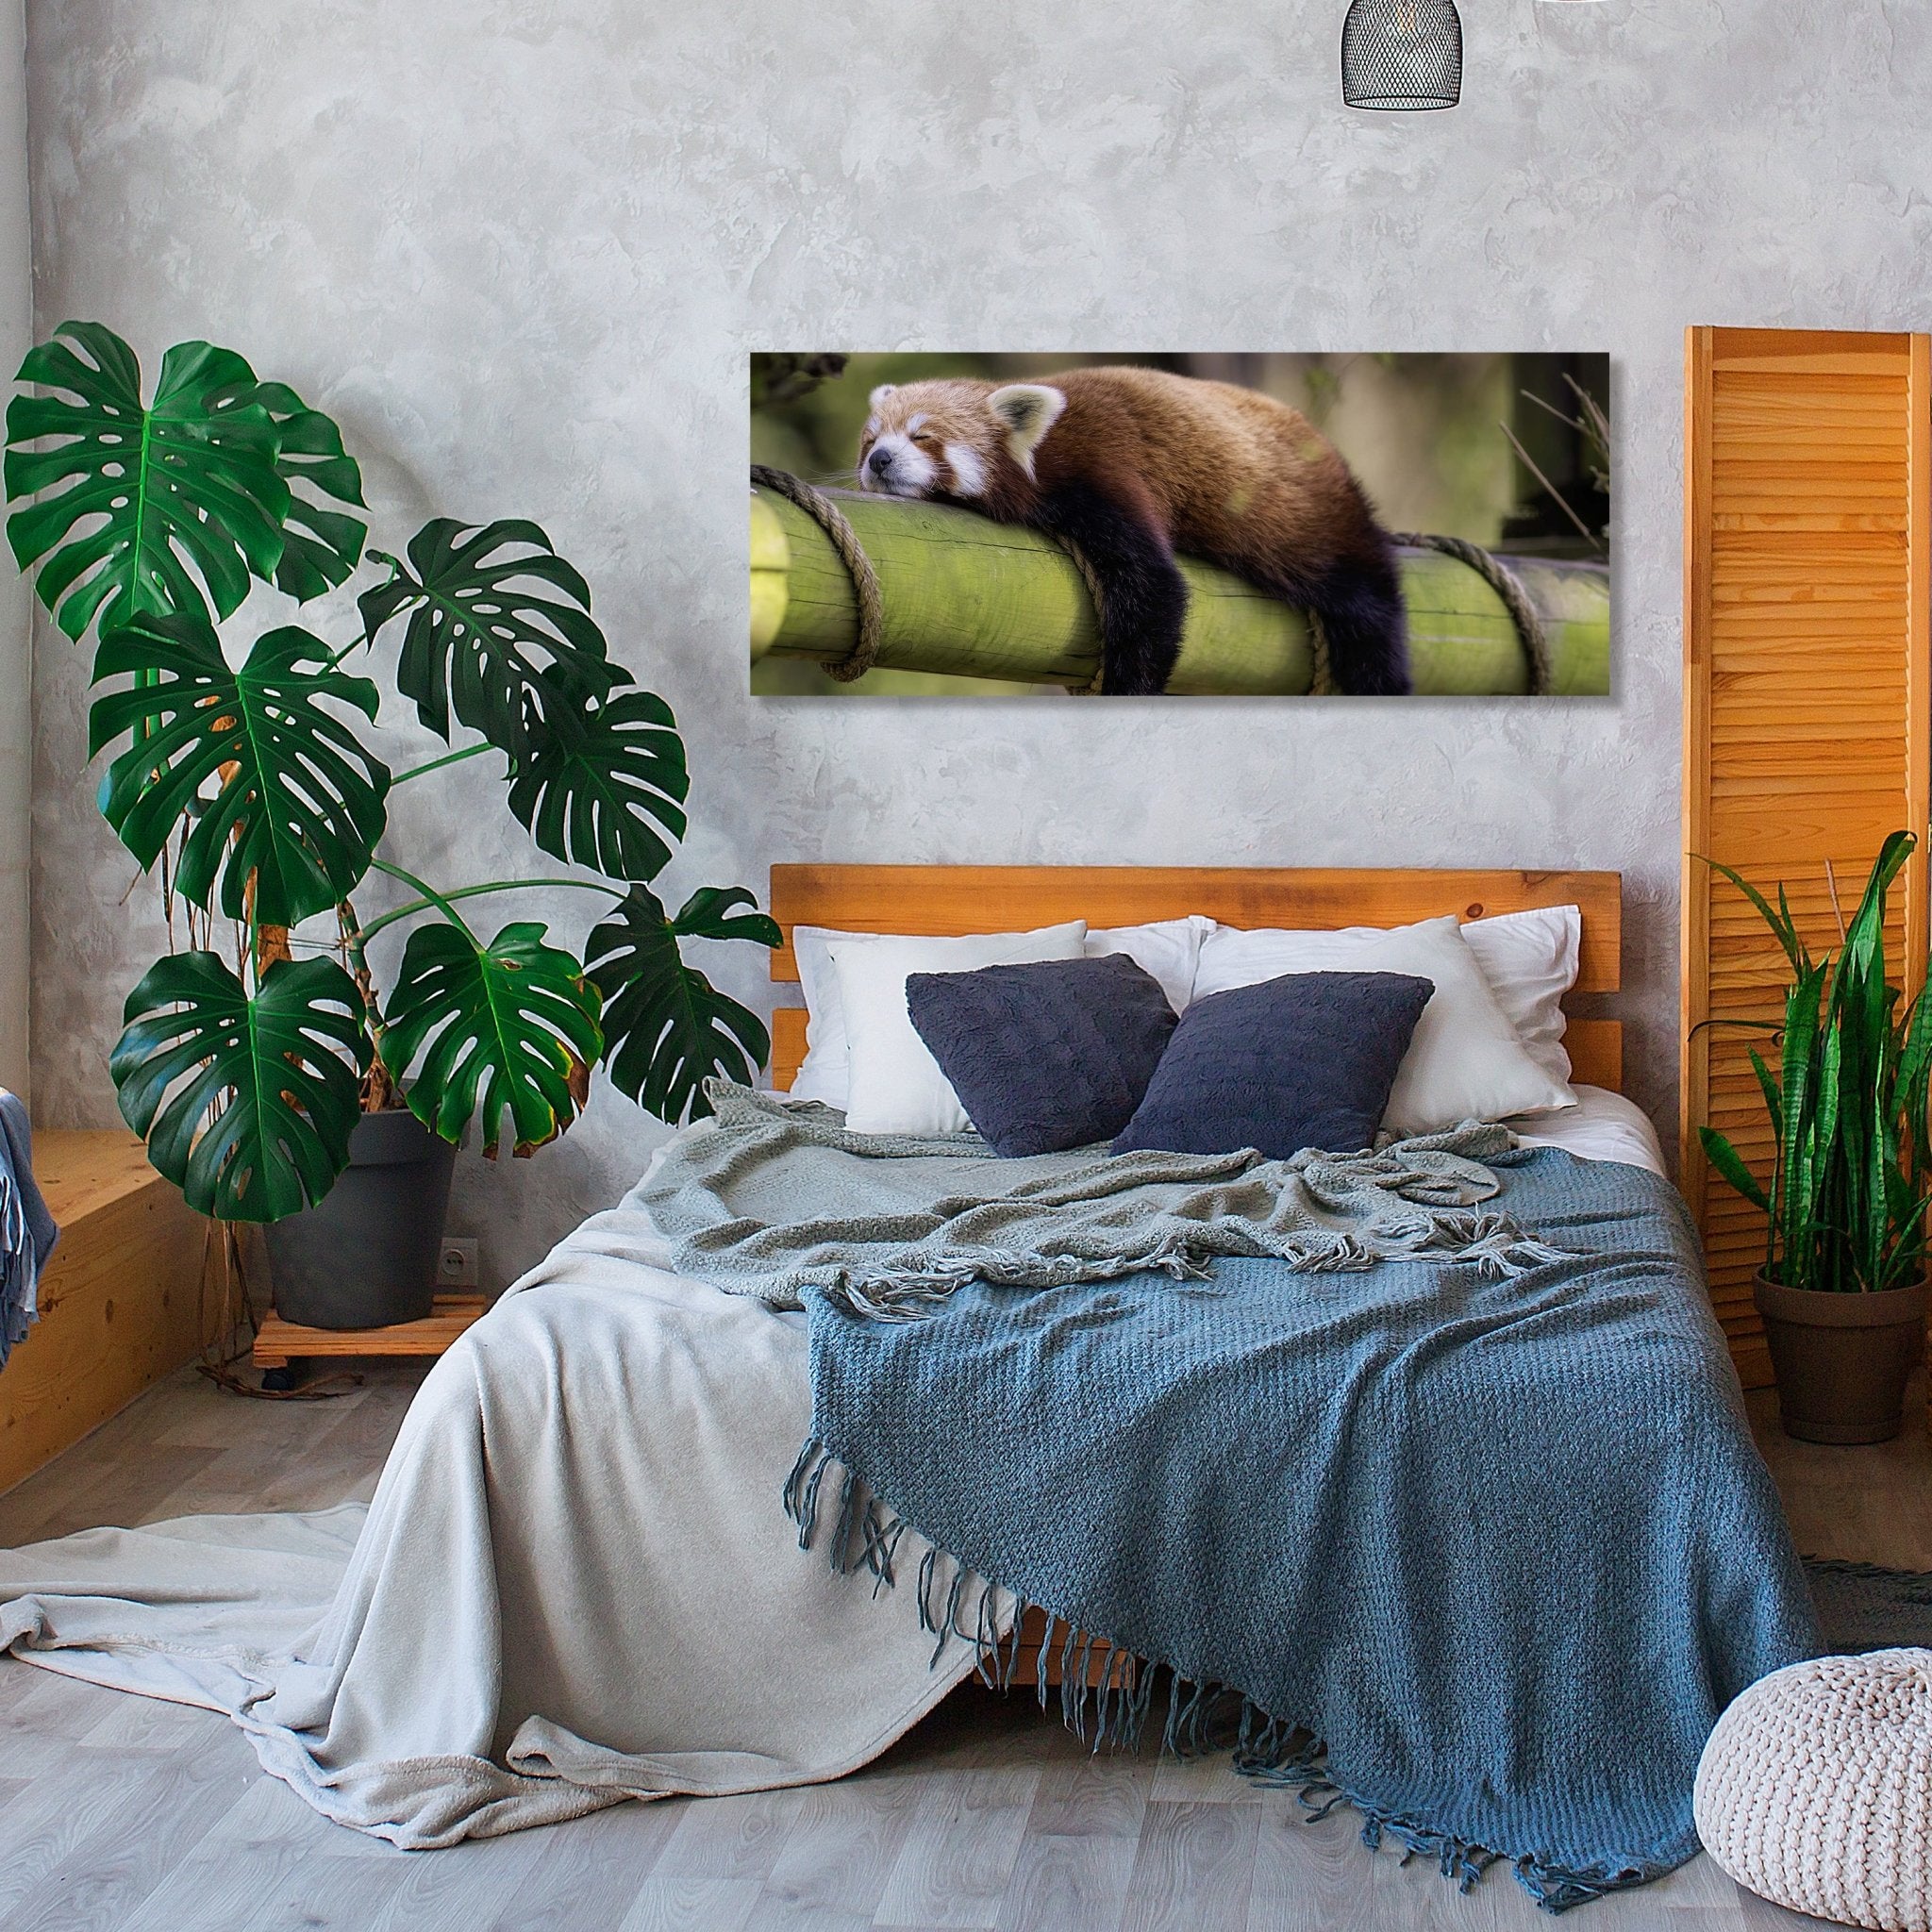 Leinwandbild schlafender roter Panda, Bambus M1114 kaufen - Bild 2